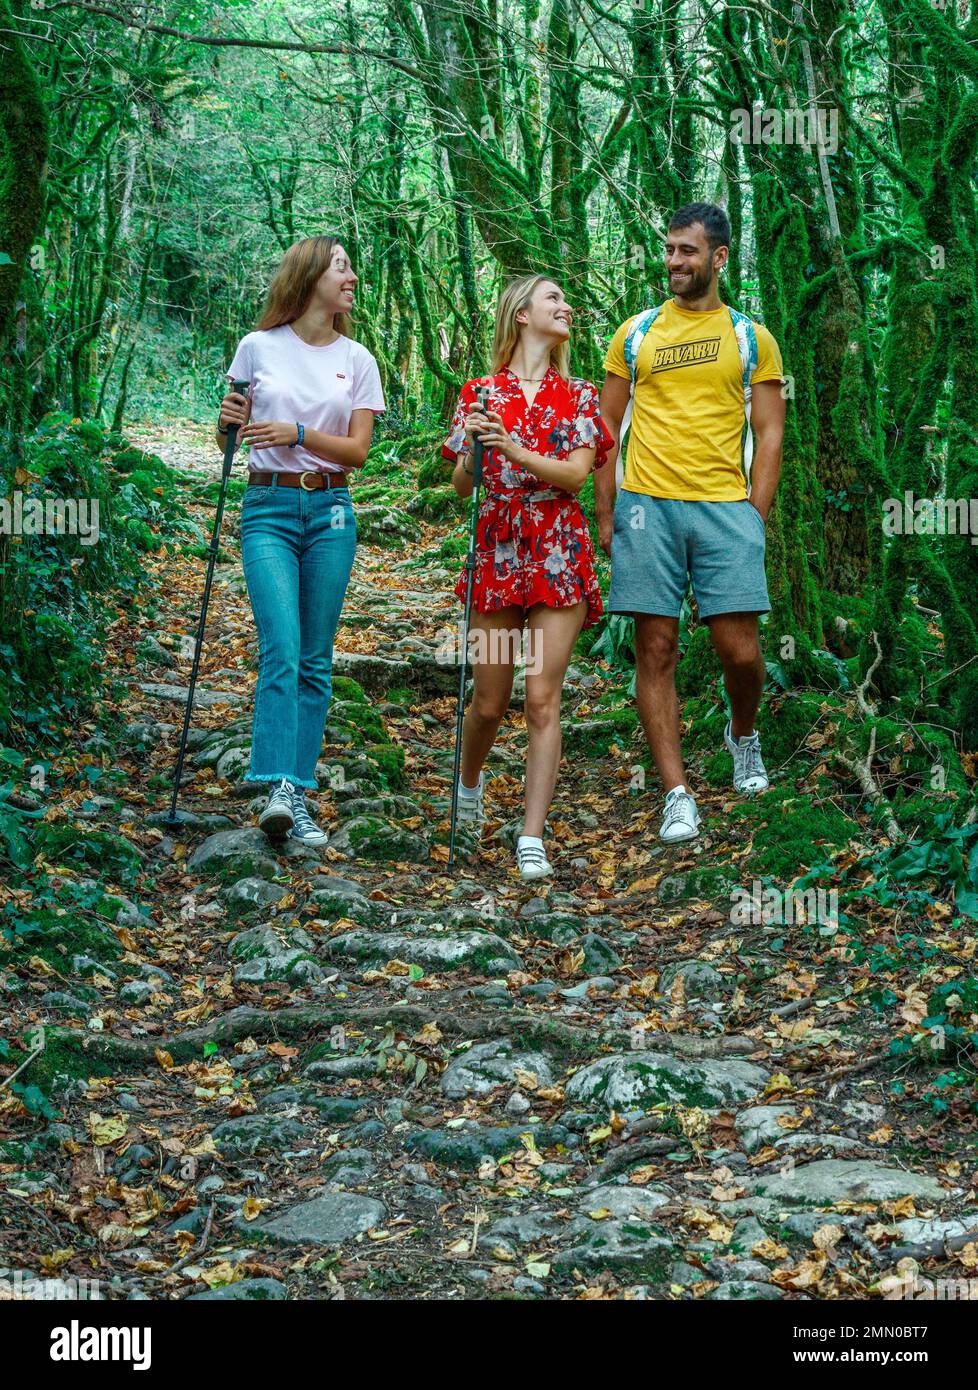 France, Haute Garonne, Arbas, La Gourgue d'Arbas, group of 3 friends walking in a forest in summer Stock Photo